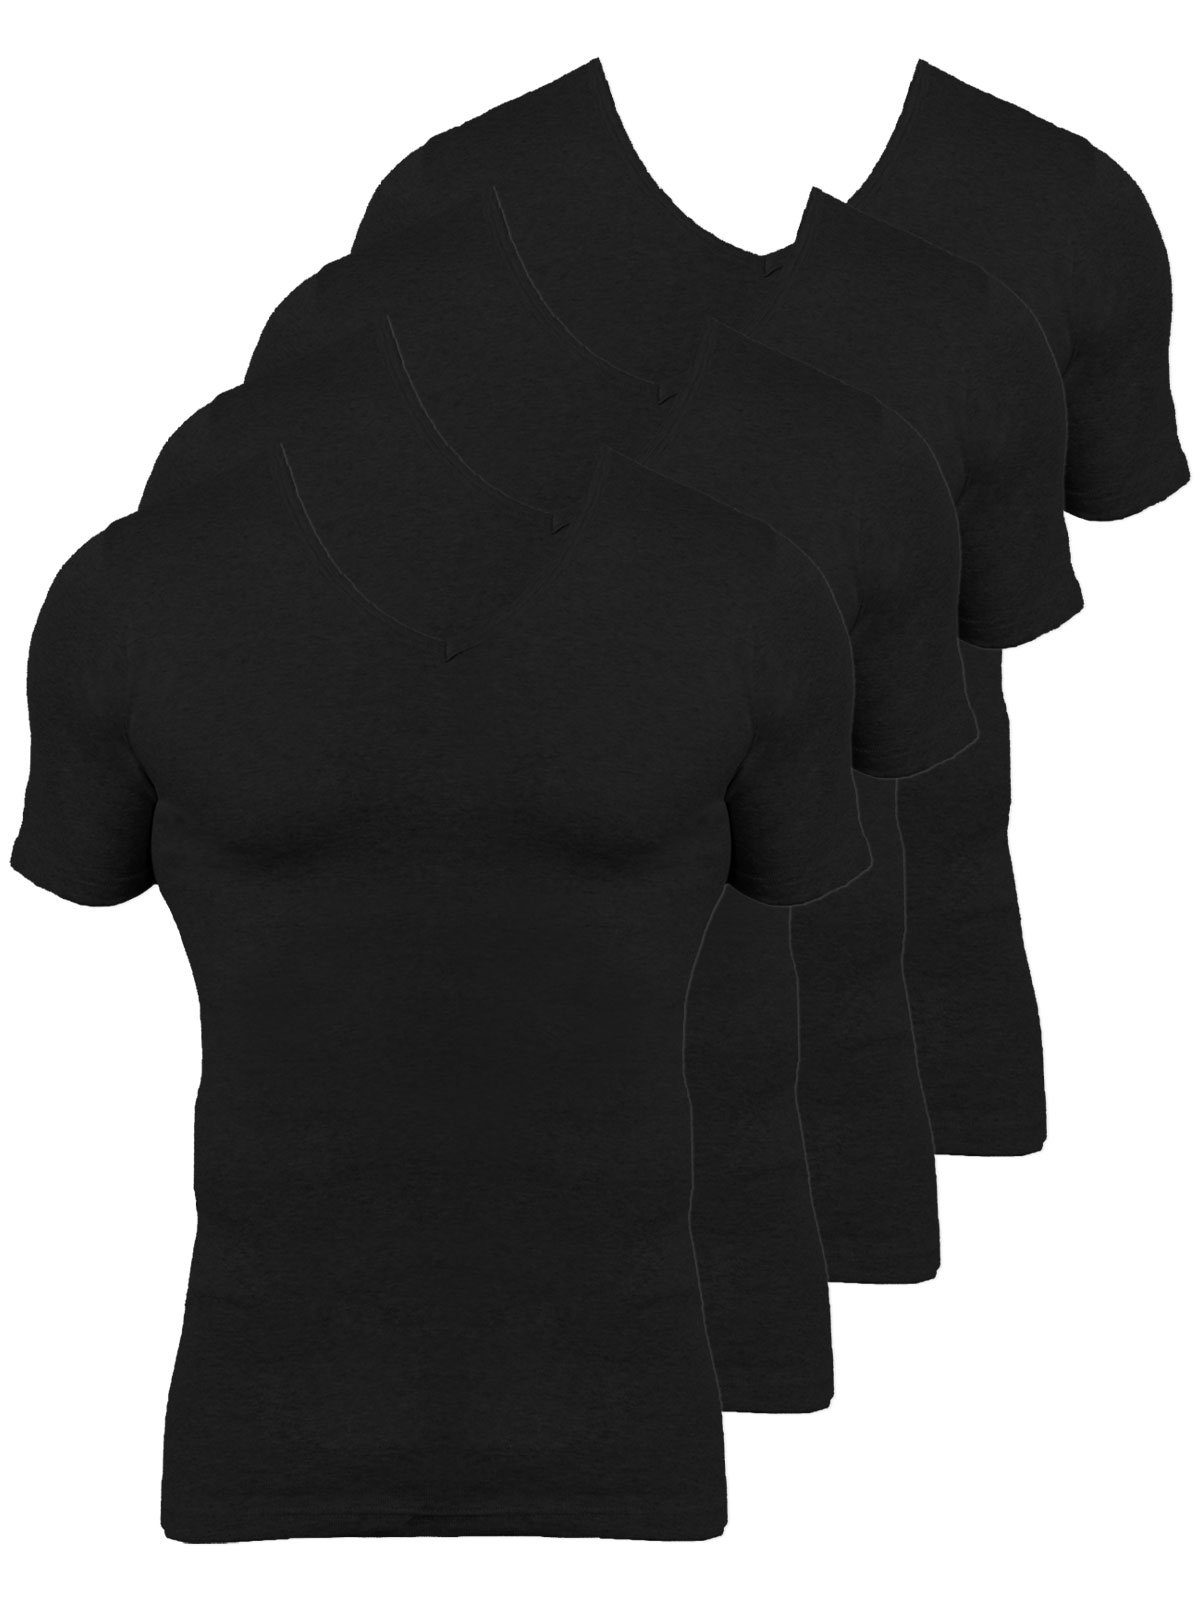 KUMPF Unterziehshirt 4er Sparpack Herren T-Shirt Bio Cotton (Spar-Set, 4-St) hohe Markenqualität schwarz | Unterhemden